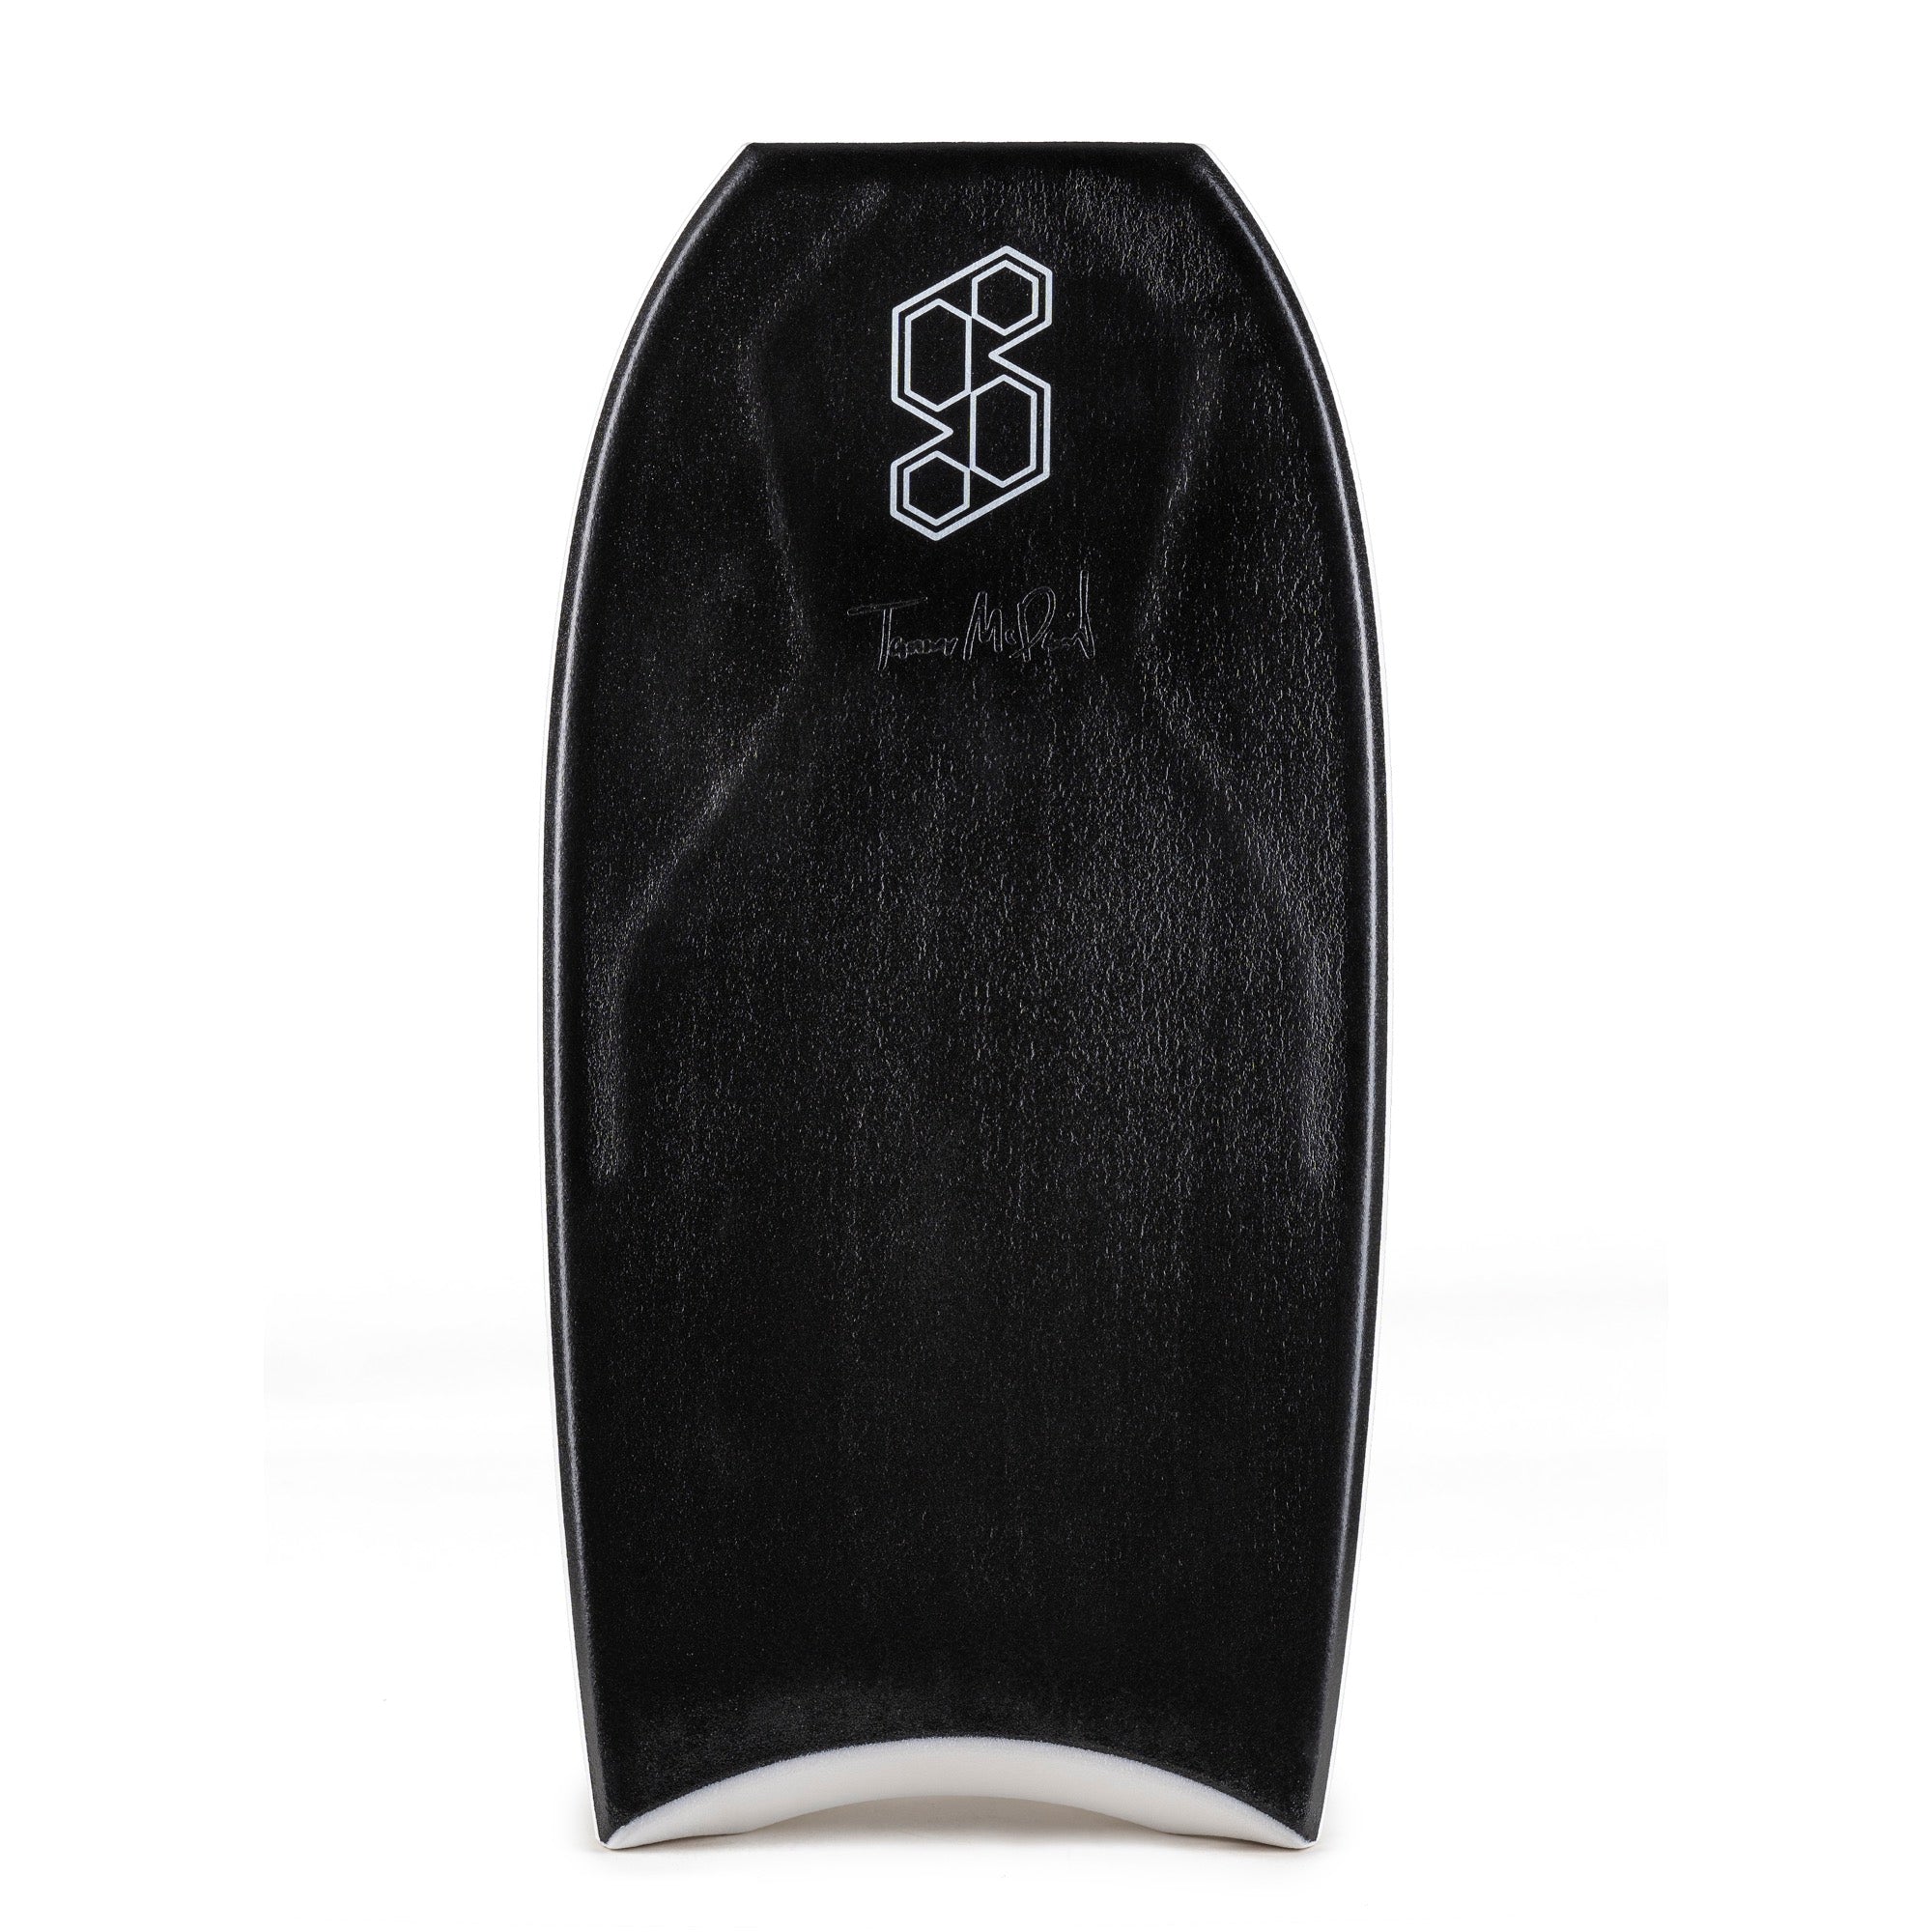 Science Bodyboard - Tanner LTD PP Tri Quad F4 - Black / White